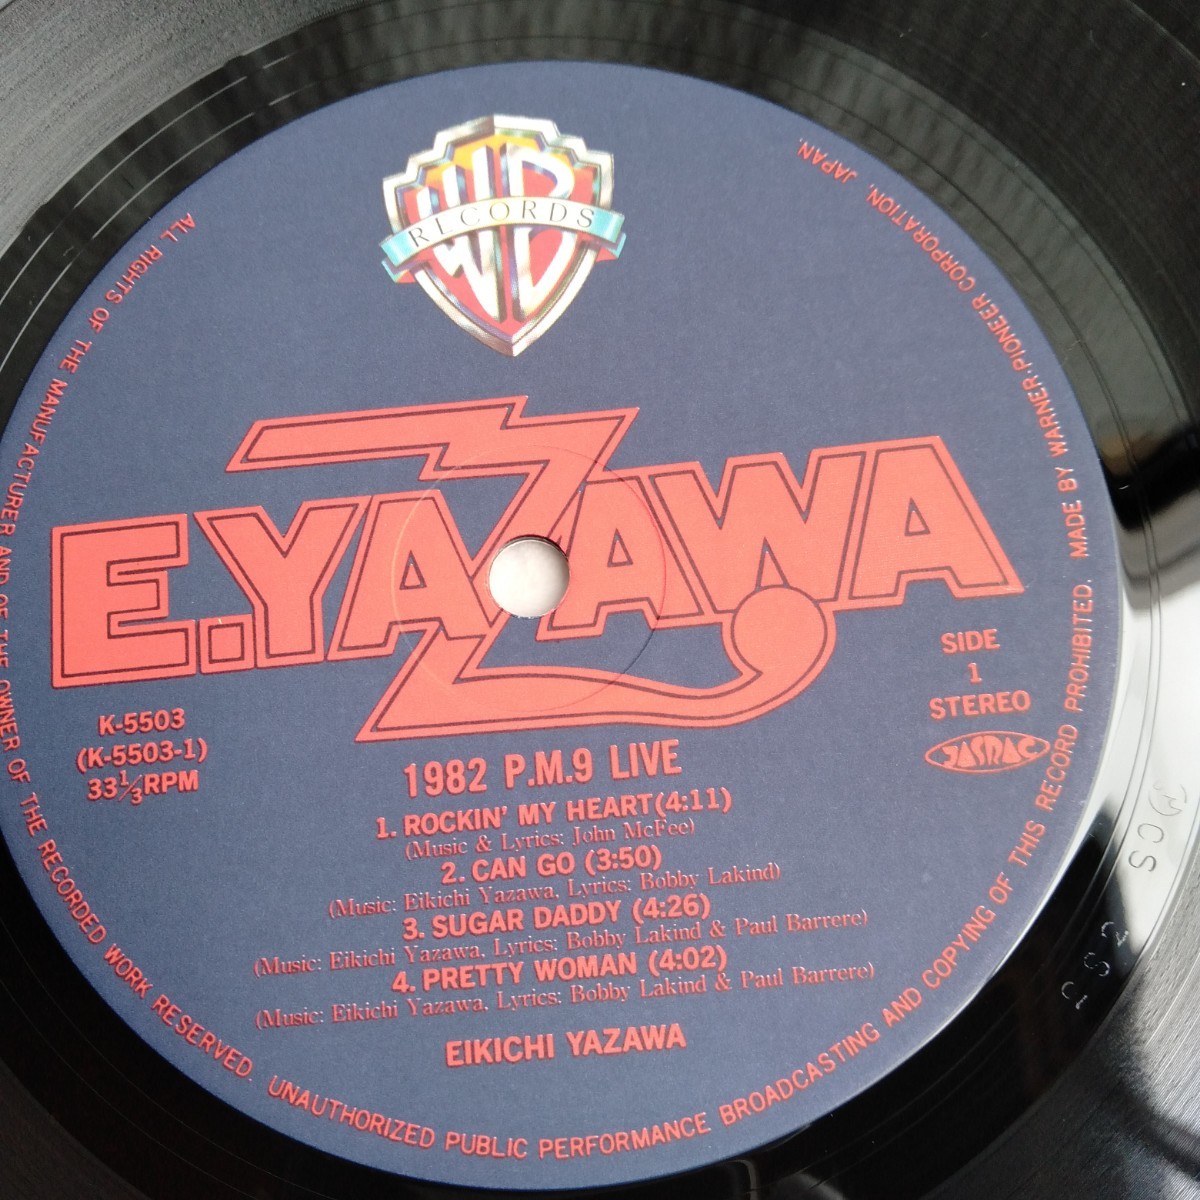 ya255 1982 P.M.9 LIVE/EIKICHI YAZAWA Yazawa Eikichi запись LP EP какой листов тоже единая стоимость доставки 1,000 иен воспроизведение не проверка 